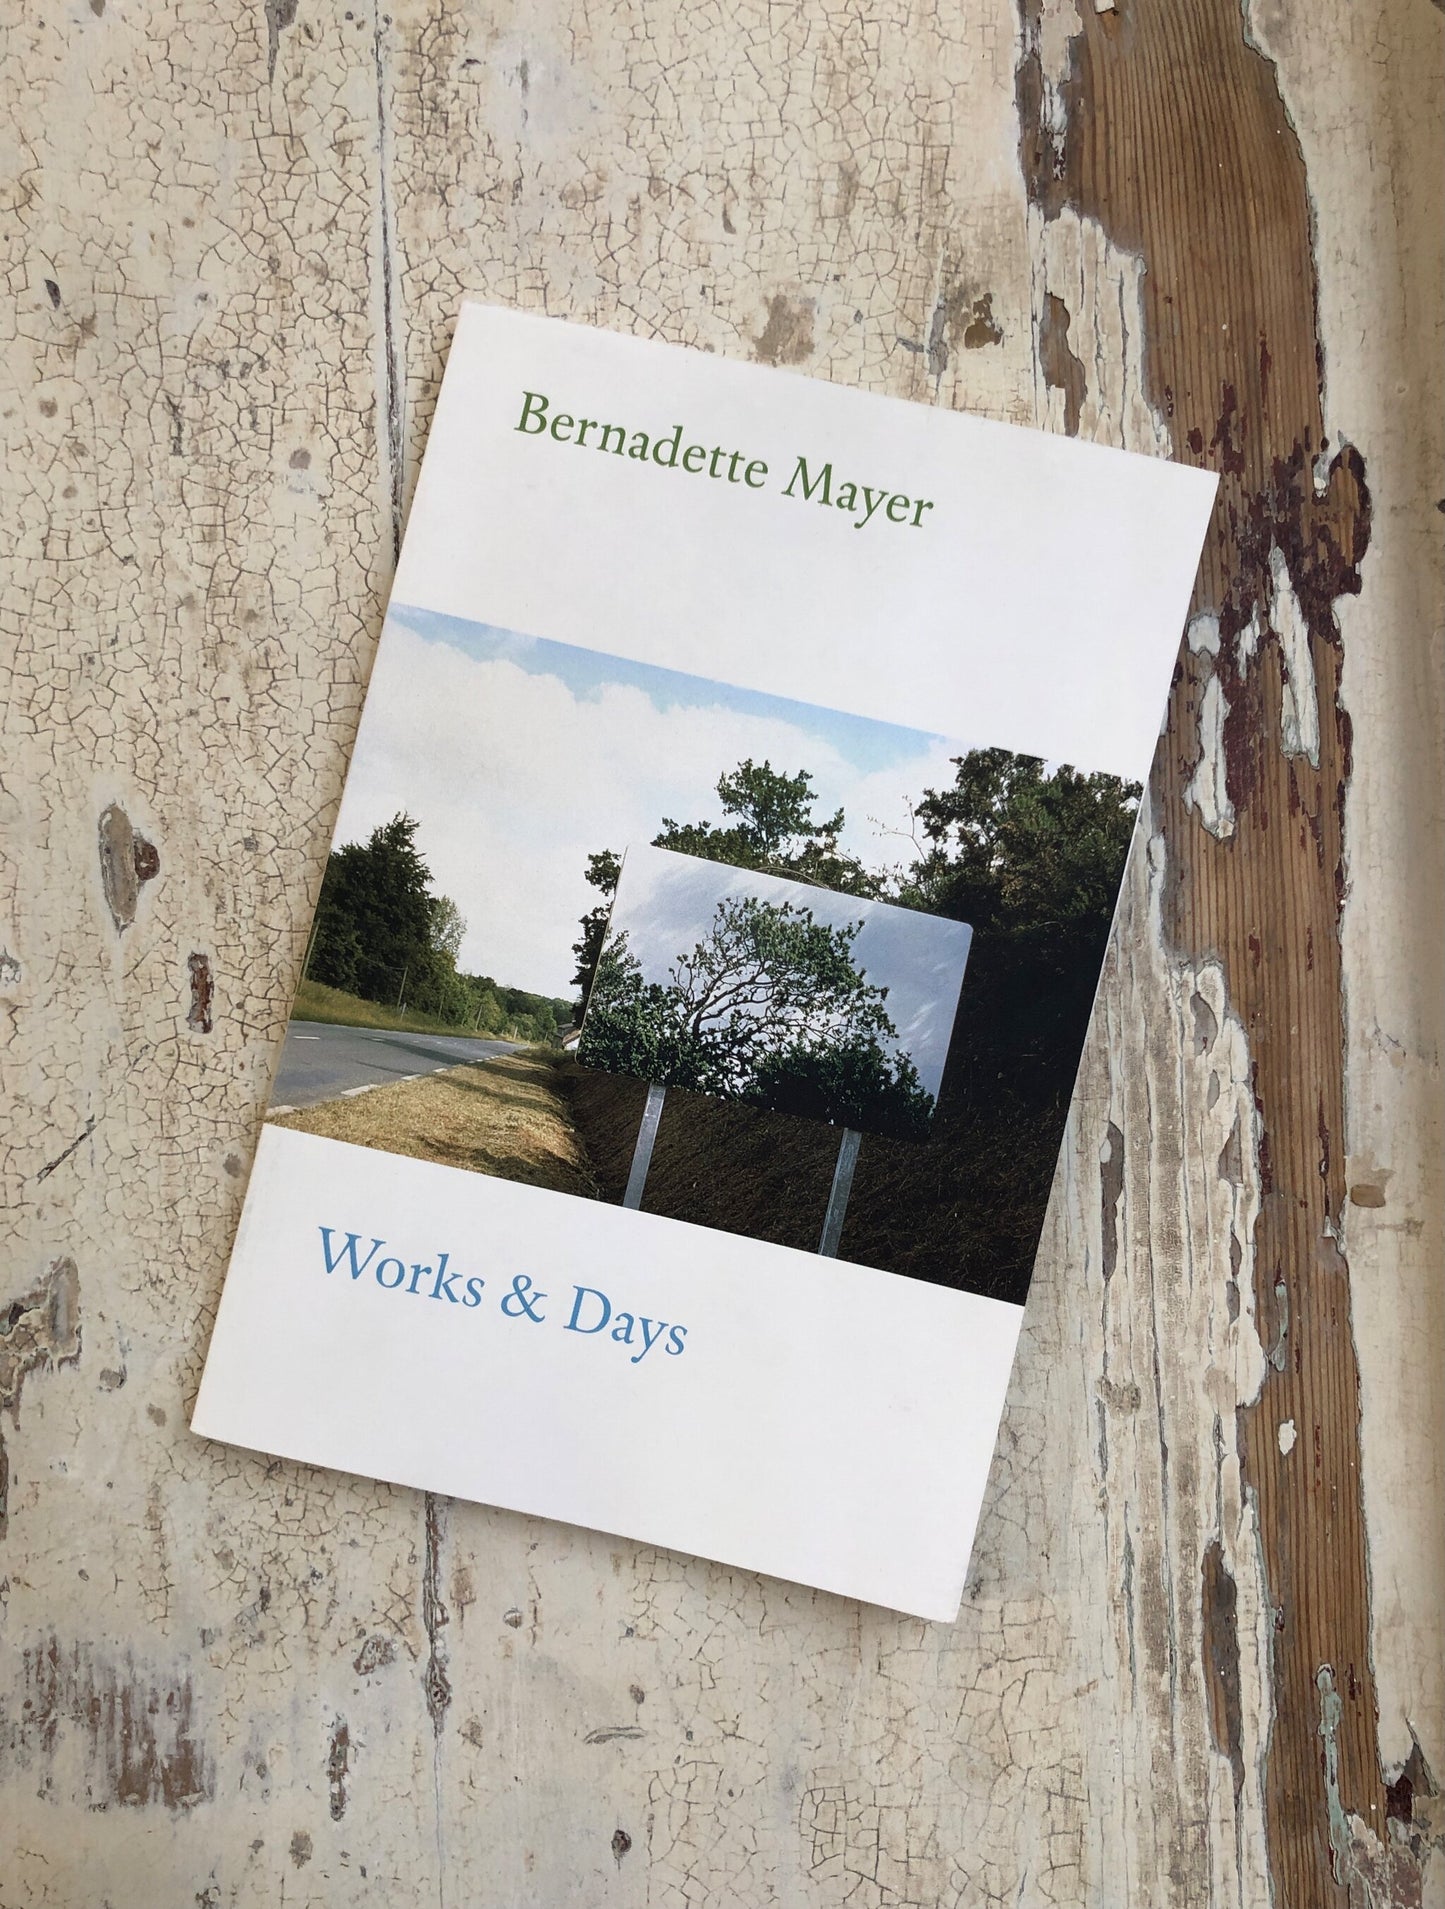 Works and Days - Bernadette Mayer